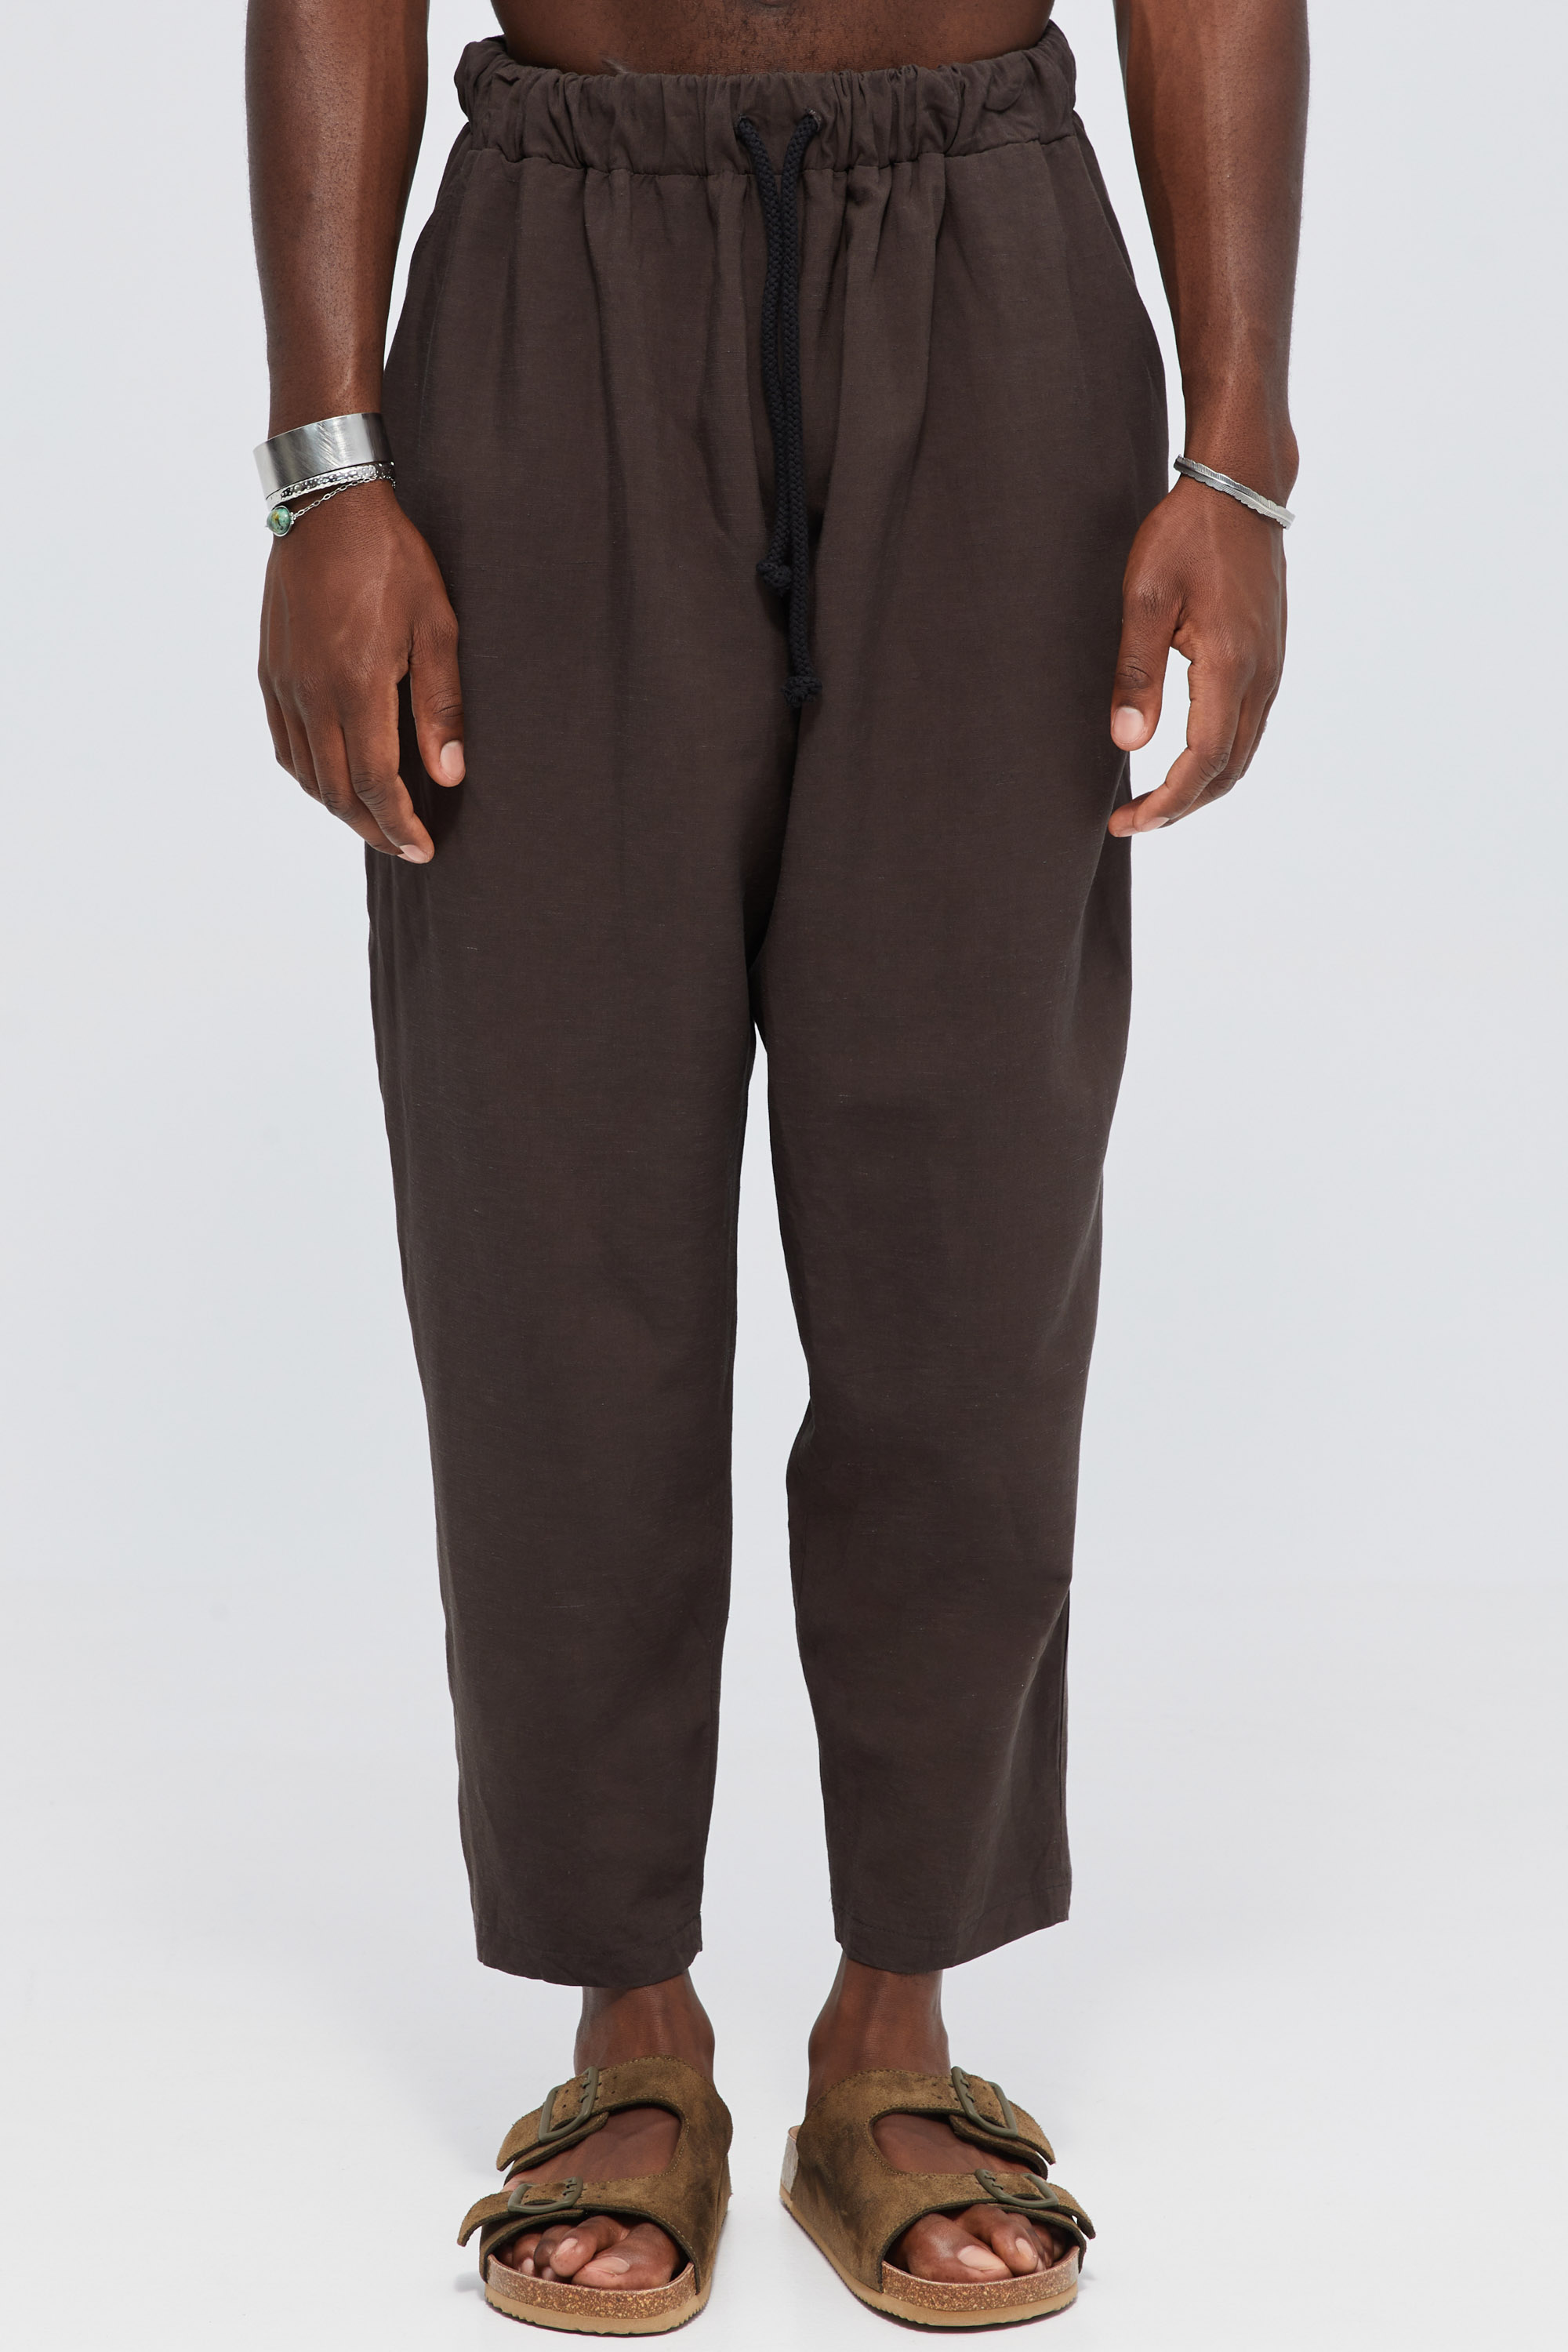 Oversized Dark Brown Trousers in Drawstring With Pleats | Aristoteli ...